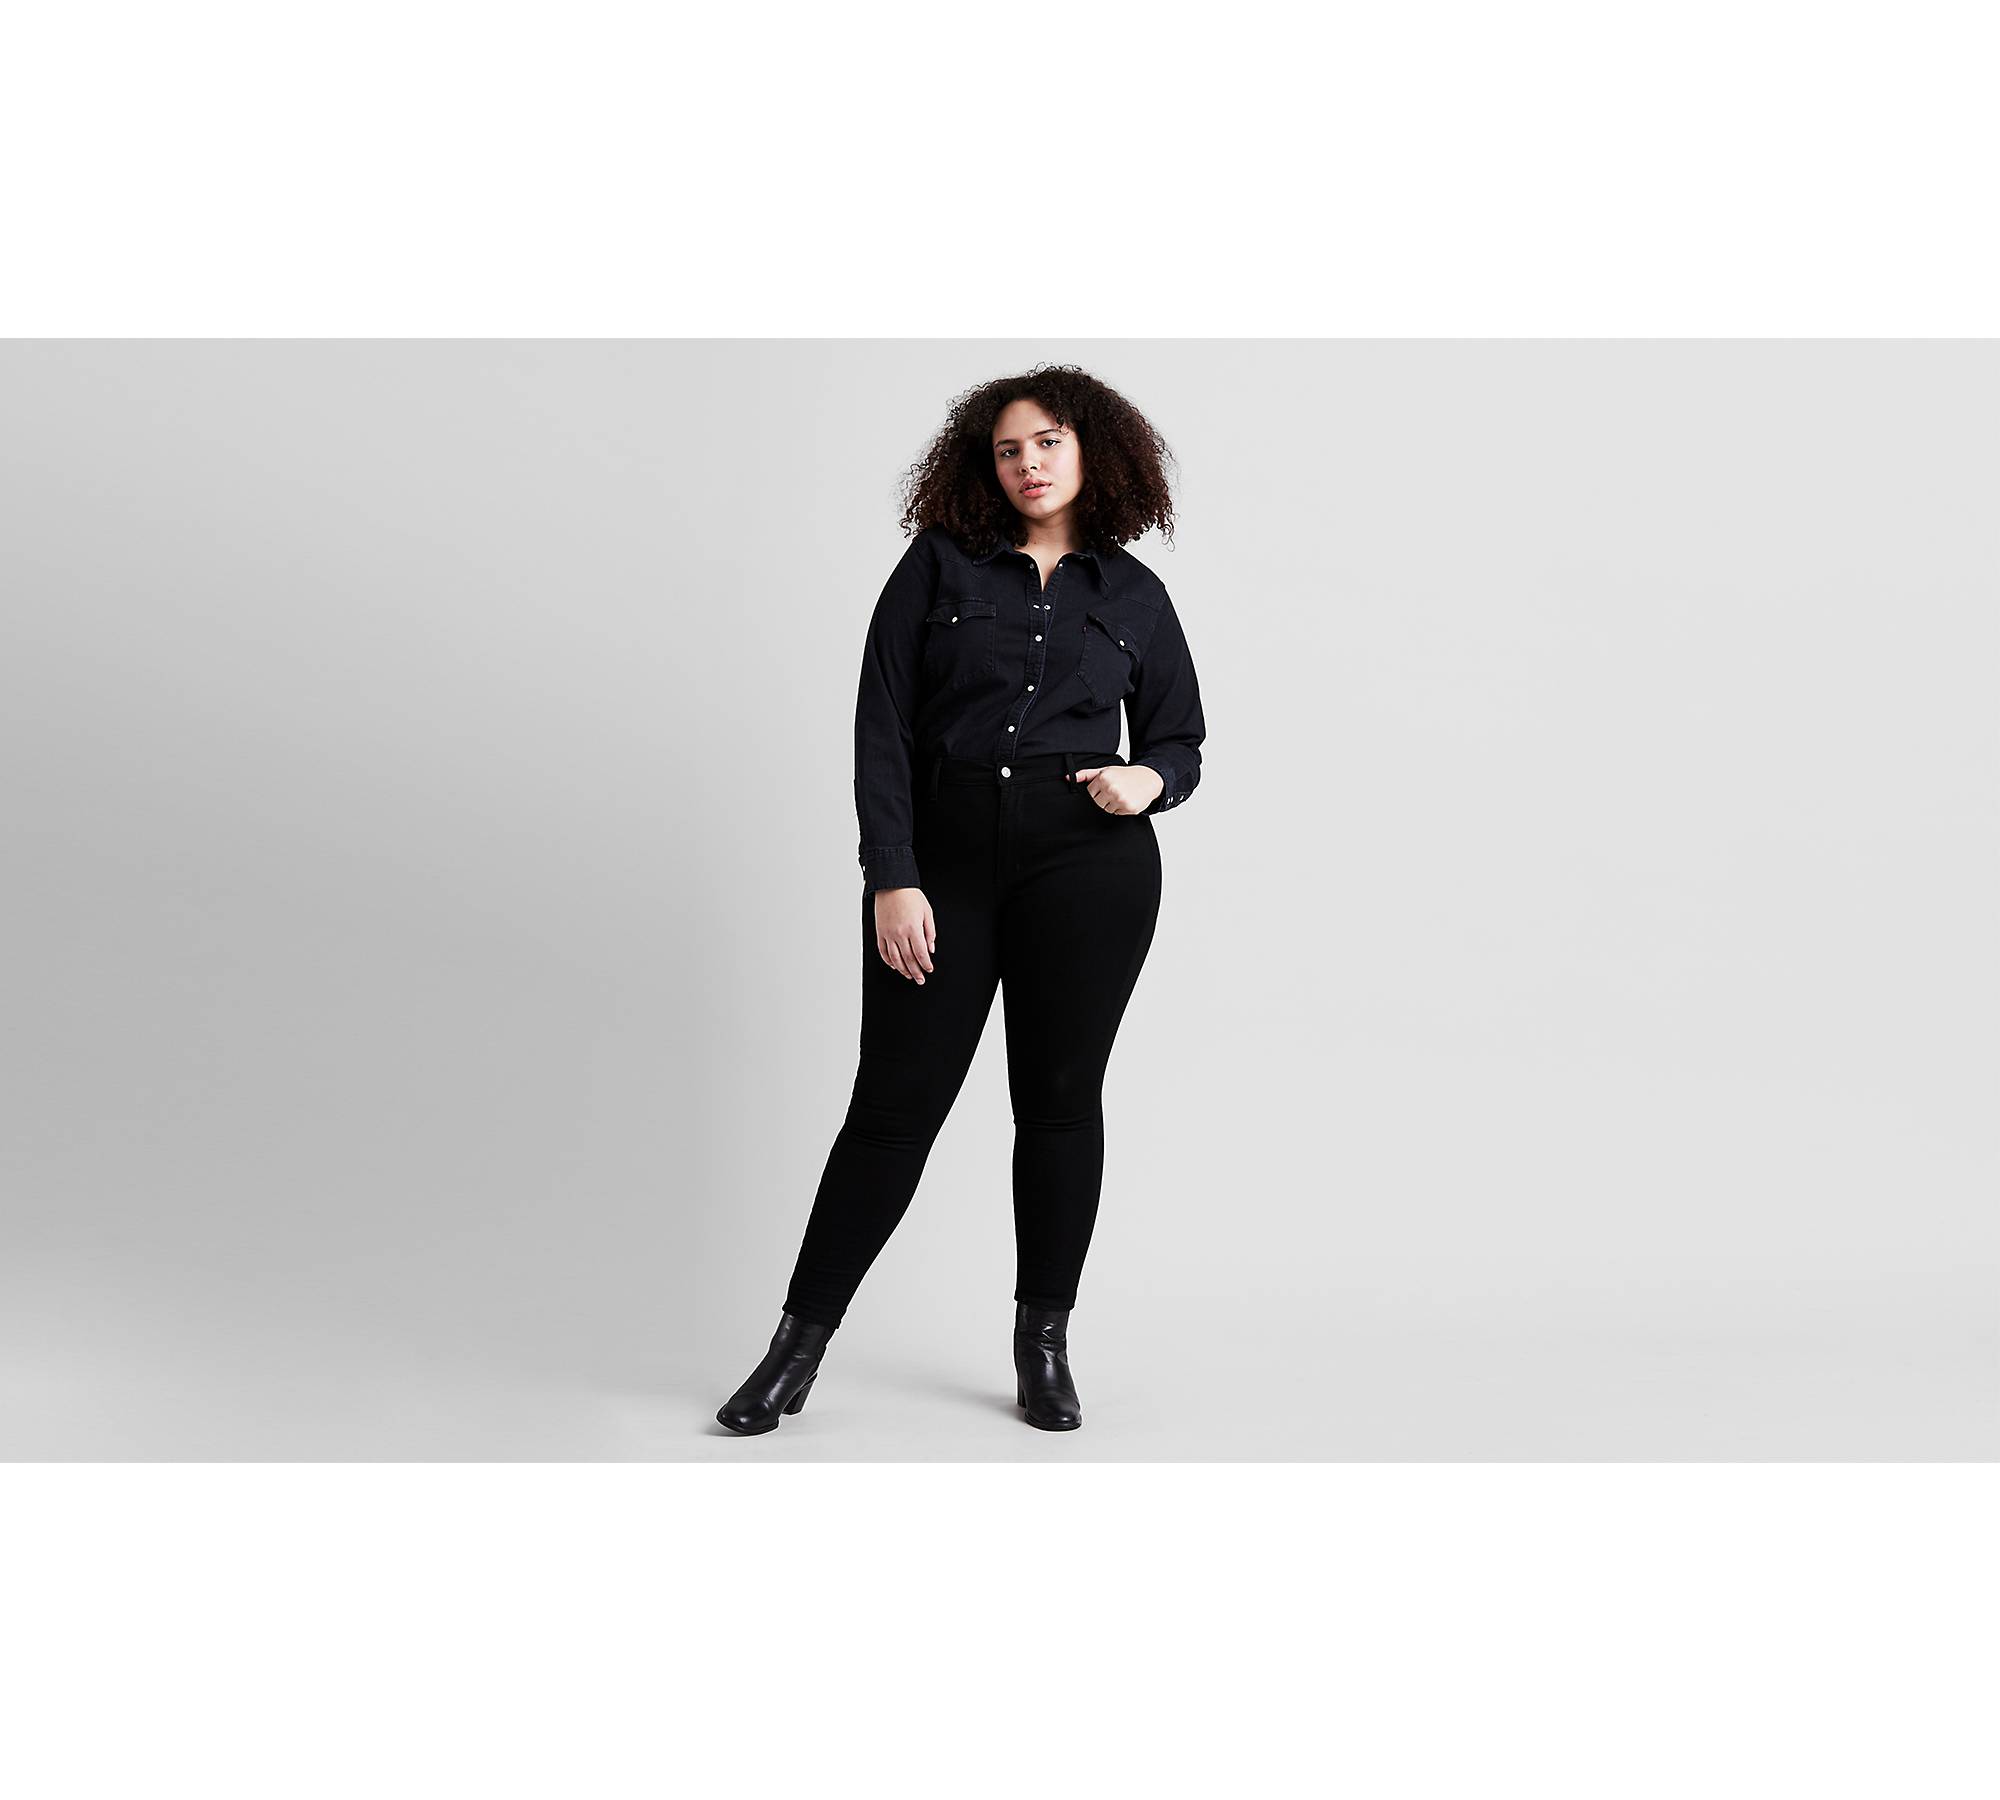 Levi's - Plus Stretch Fabric Womens High Rise 720 Slim Fit Skinny Fit Jean